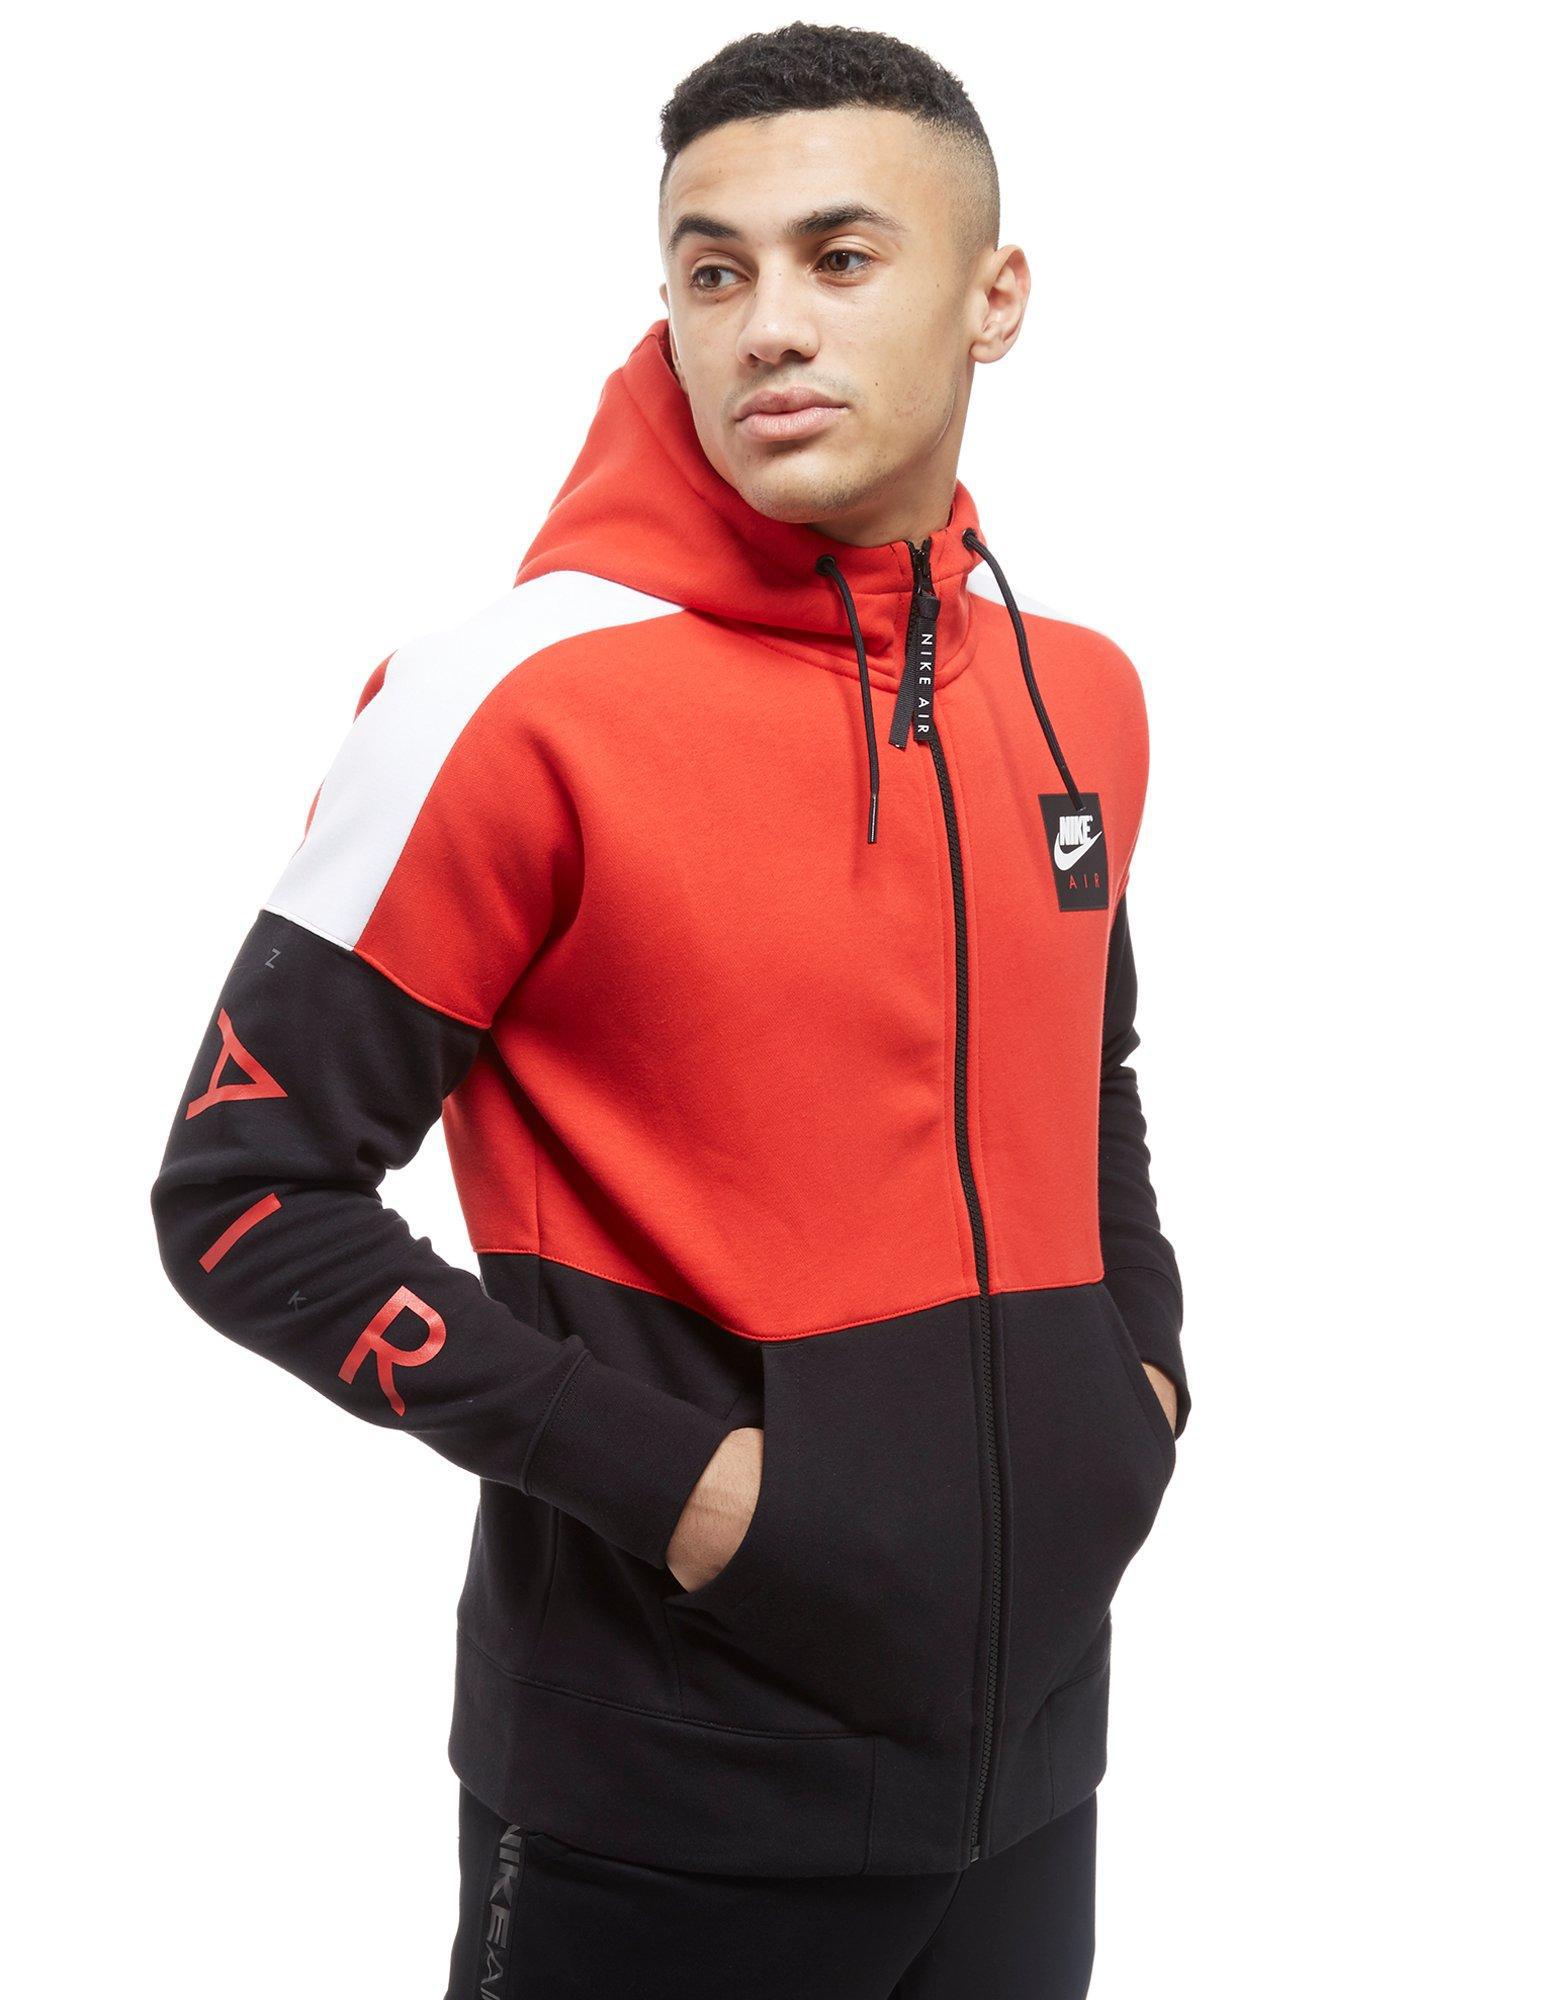 Nike Cotton Air Full Zip Hoodie in Red/Black (Red) for Men - Lyst